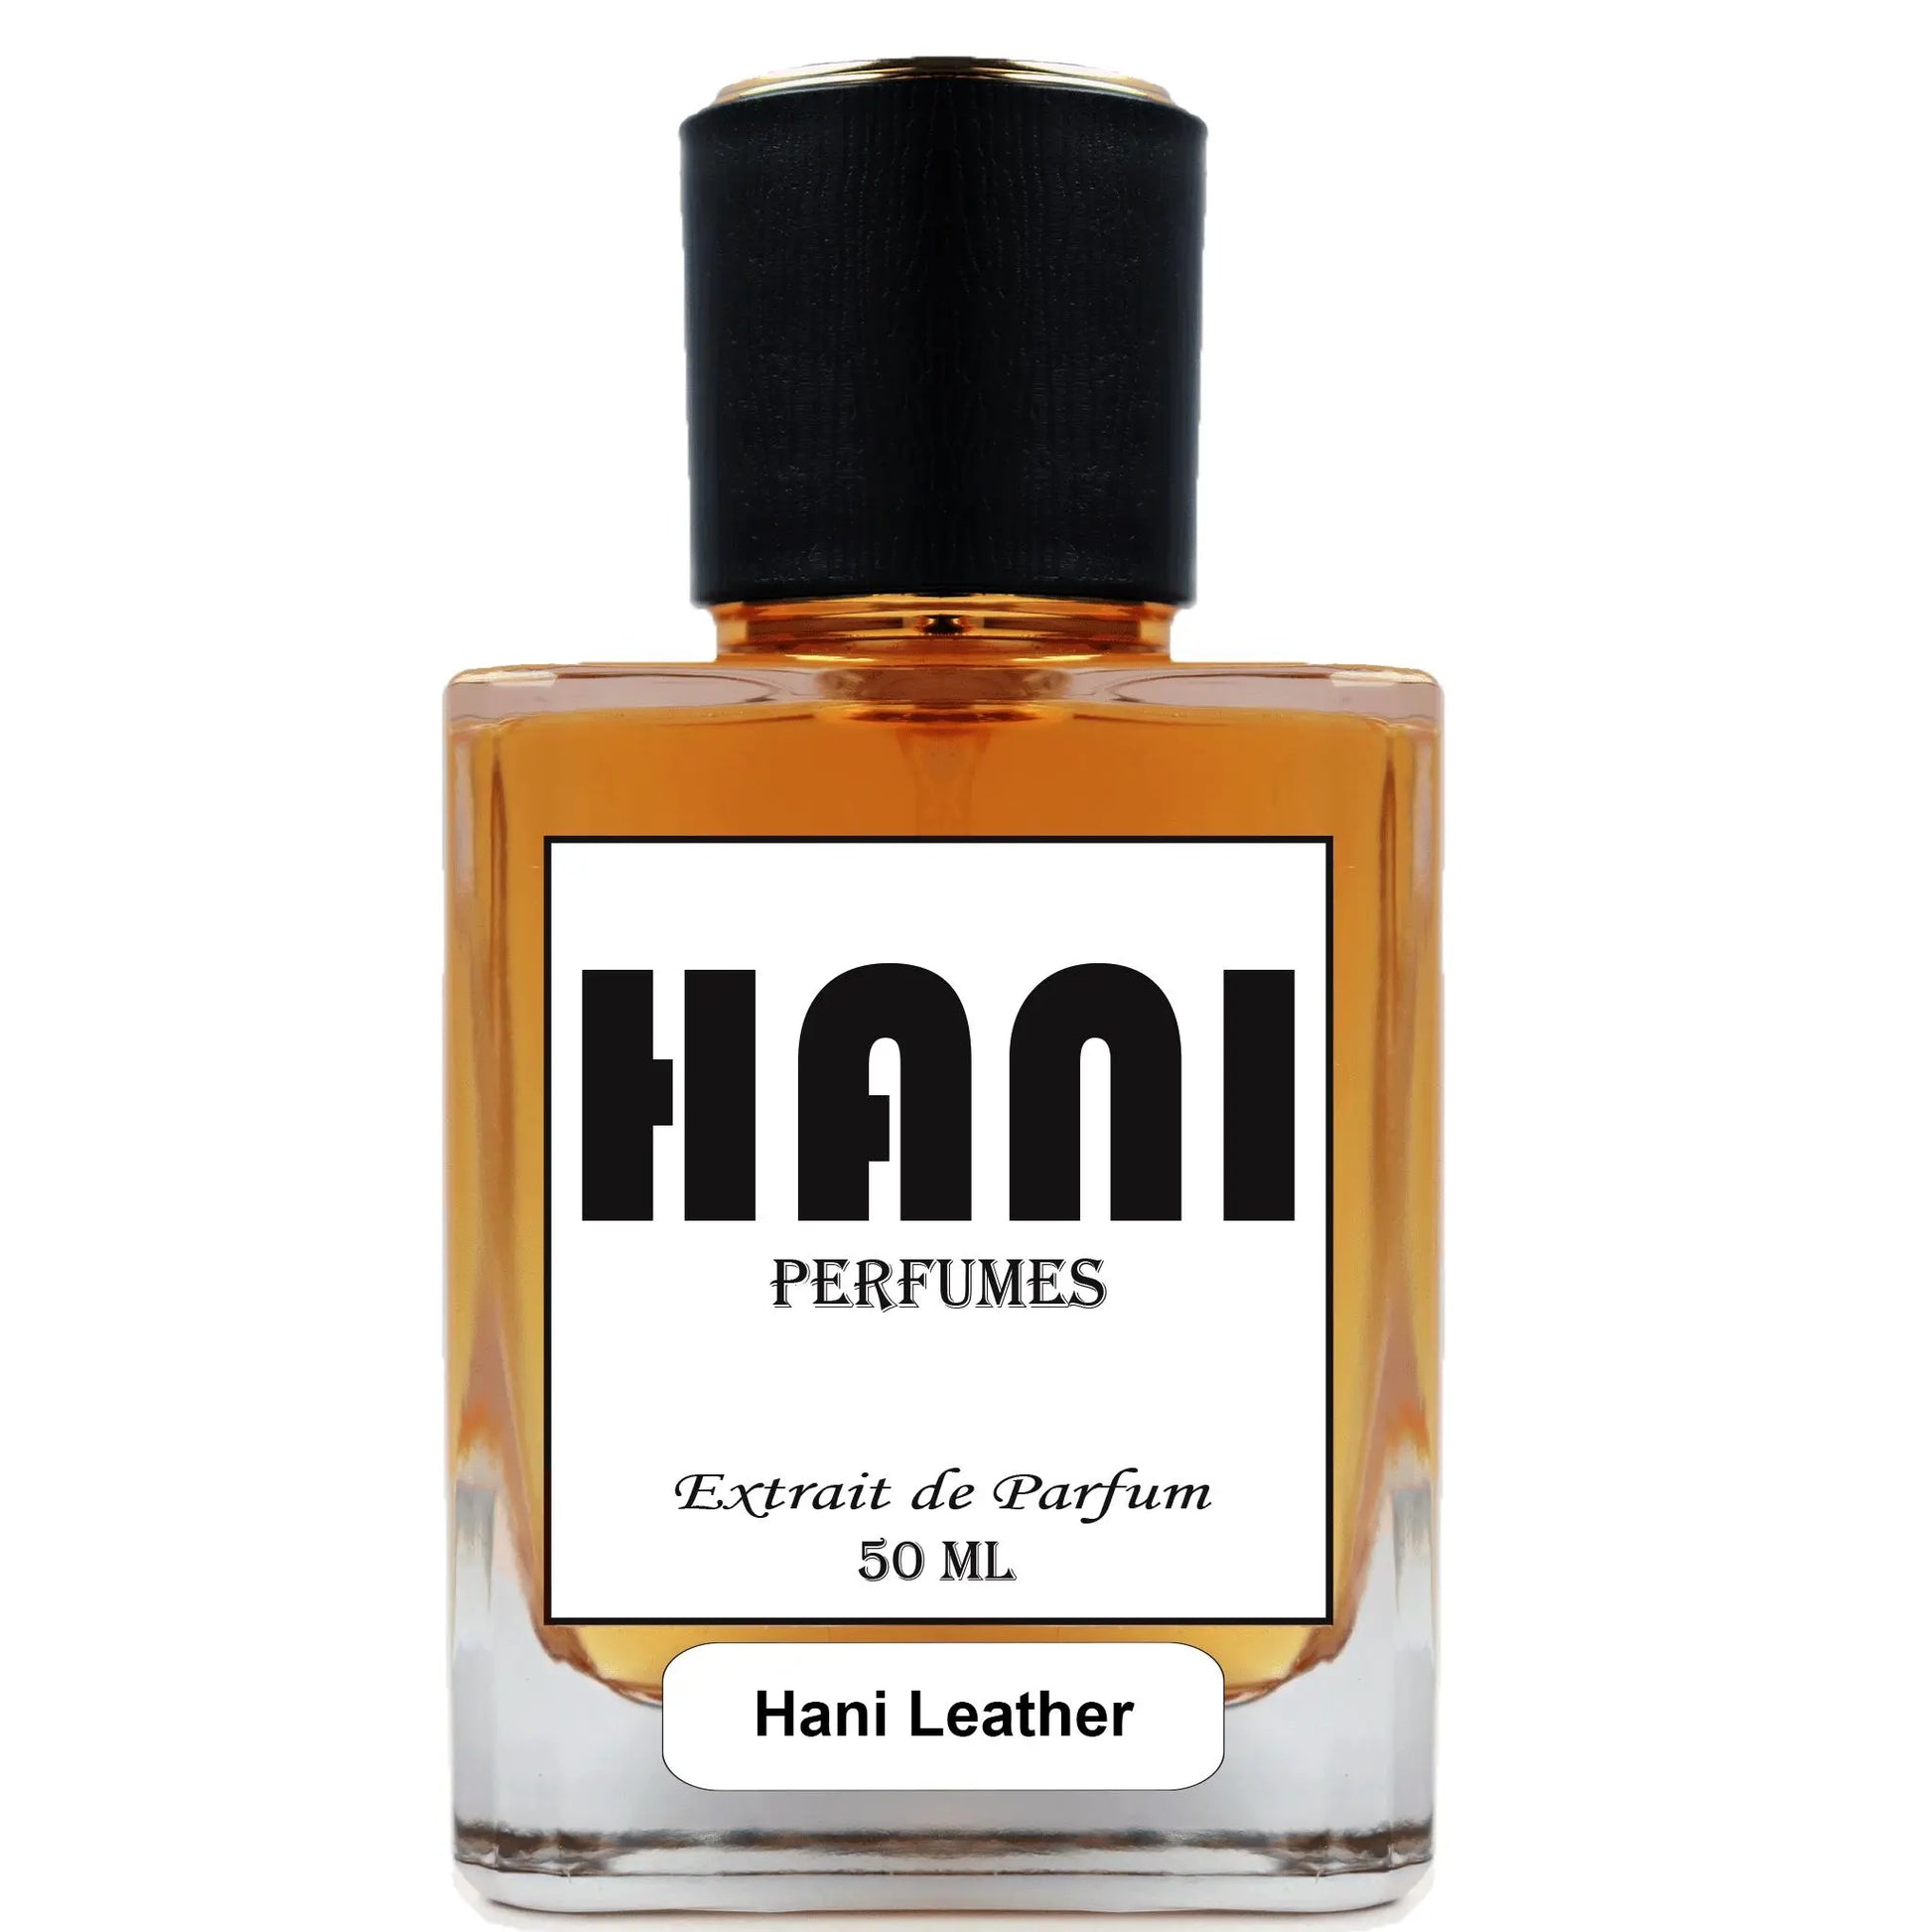 Hani Leather: Der Duftzwilling für Tom Ford's Tuscan Leather Hani-Leather-Herren-Parfumduftzwilling-parfum-dupe-zwilling-75607353